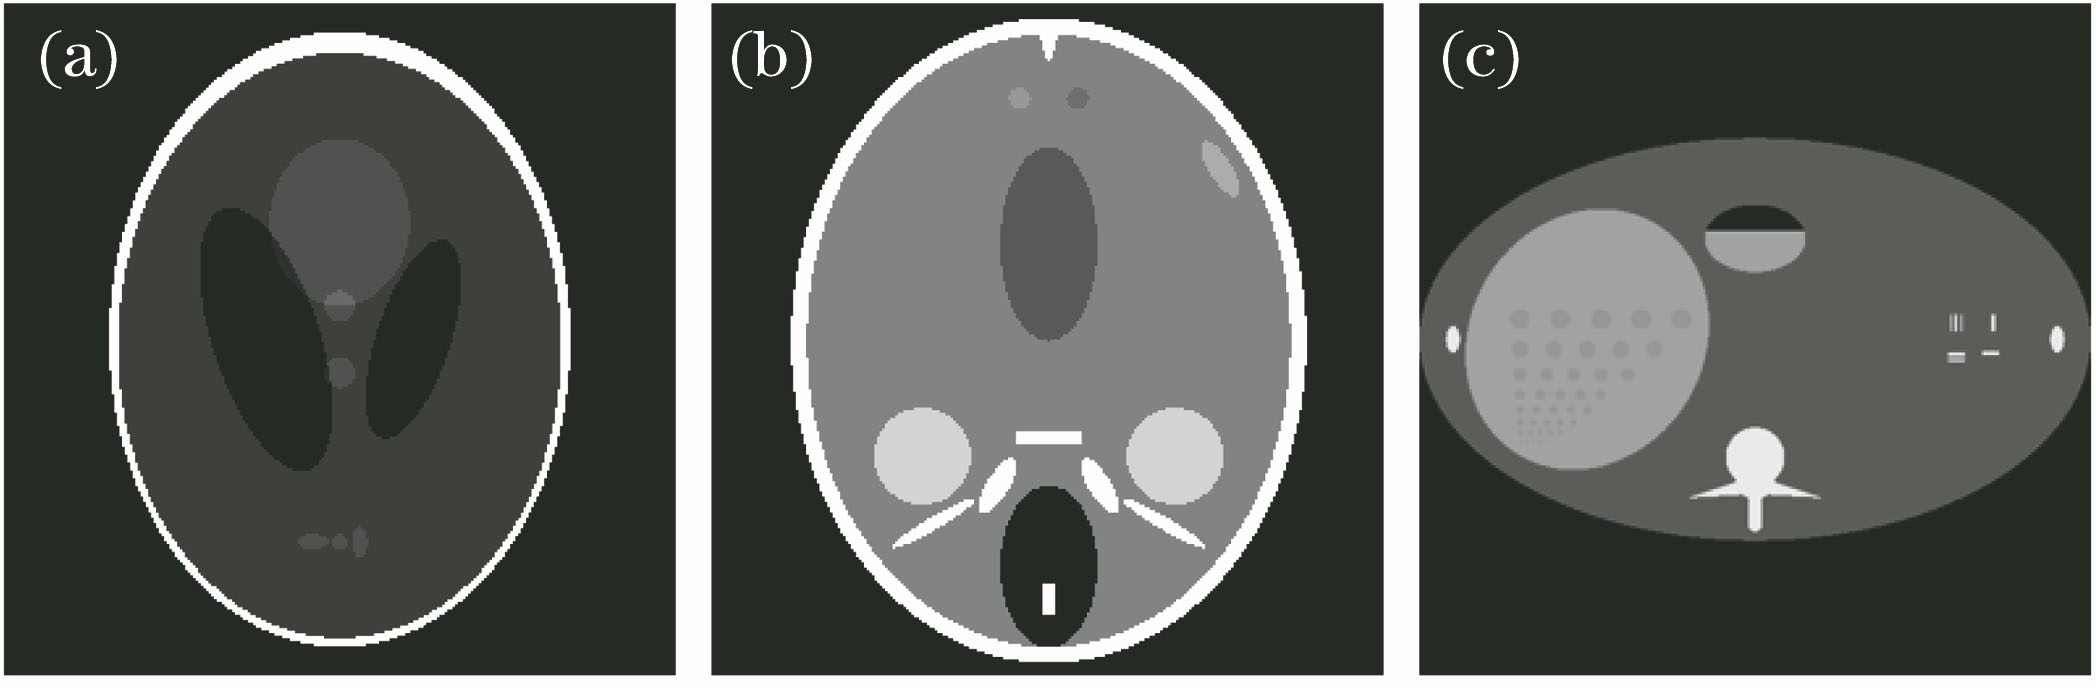 Image data used in the test. (a) Sheep-Logan image; (b) Forbild-Head image; (c) Forbild-Abdomen image